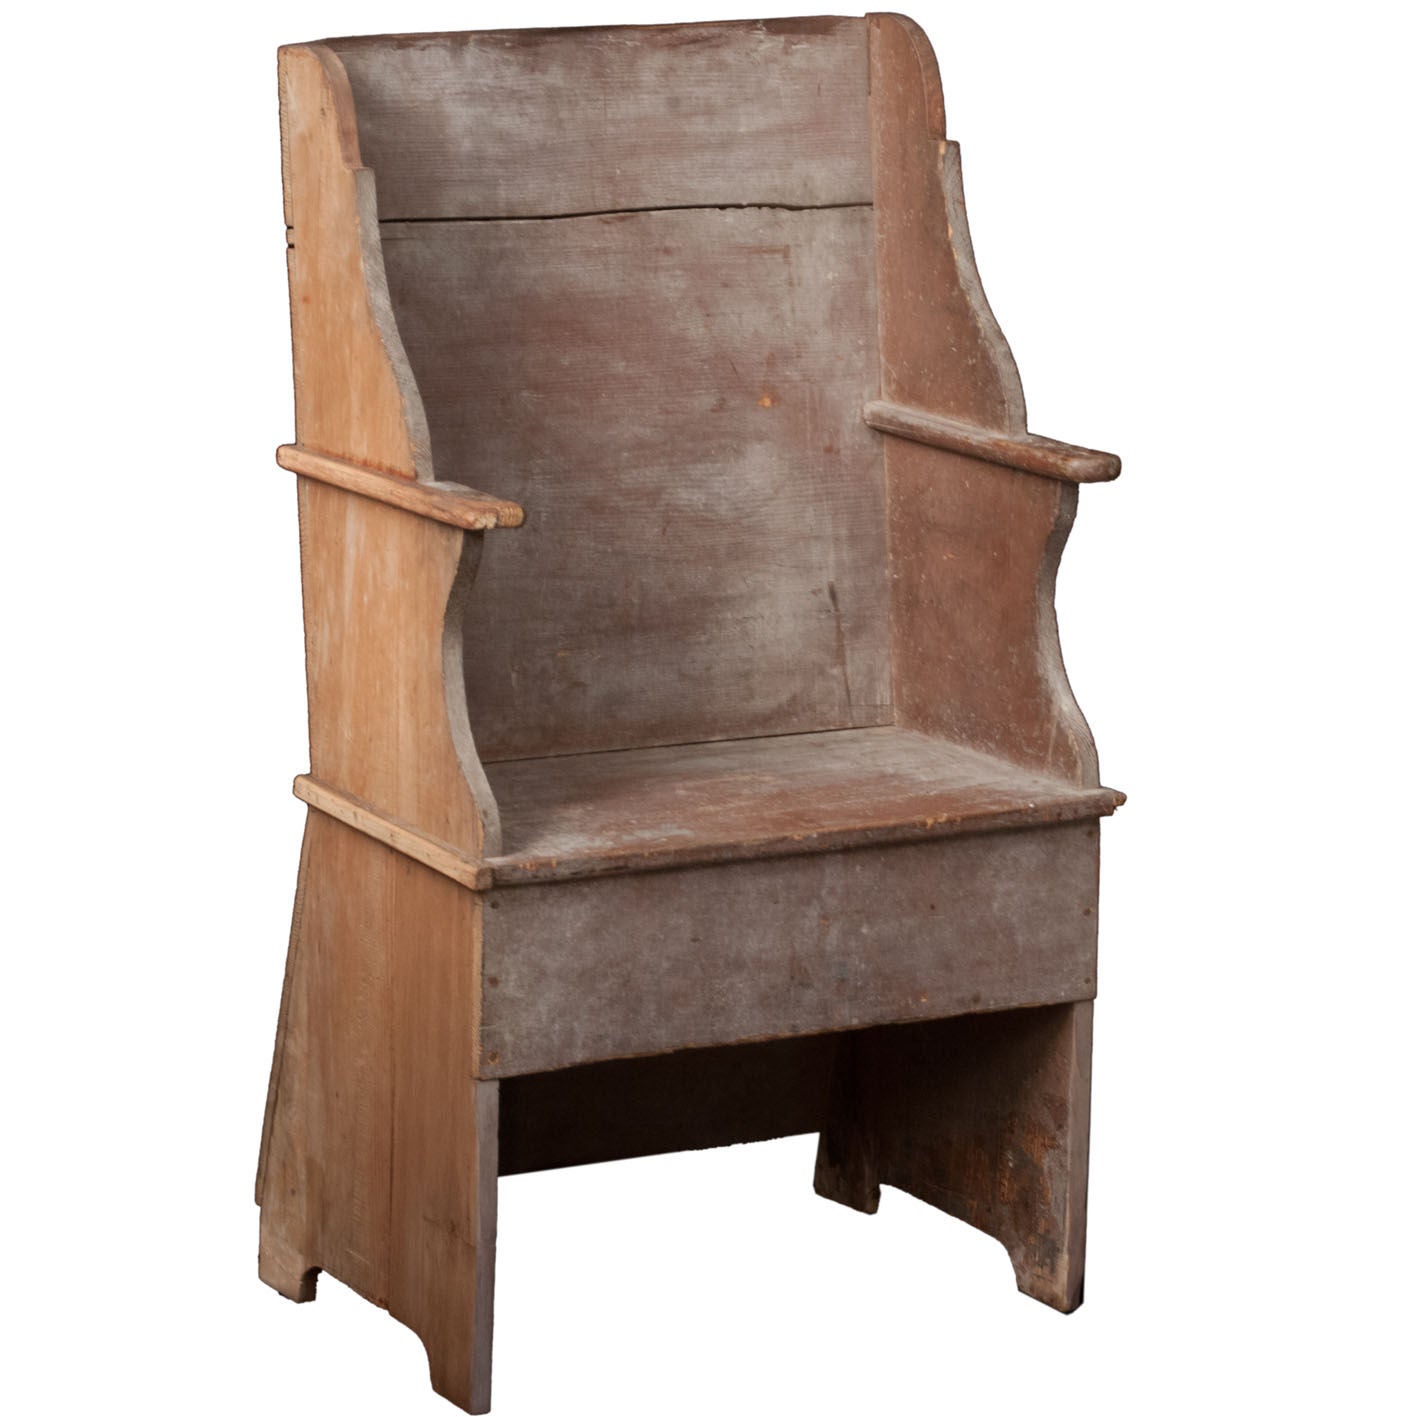 Primitive Wood  Plank Chair